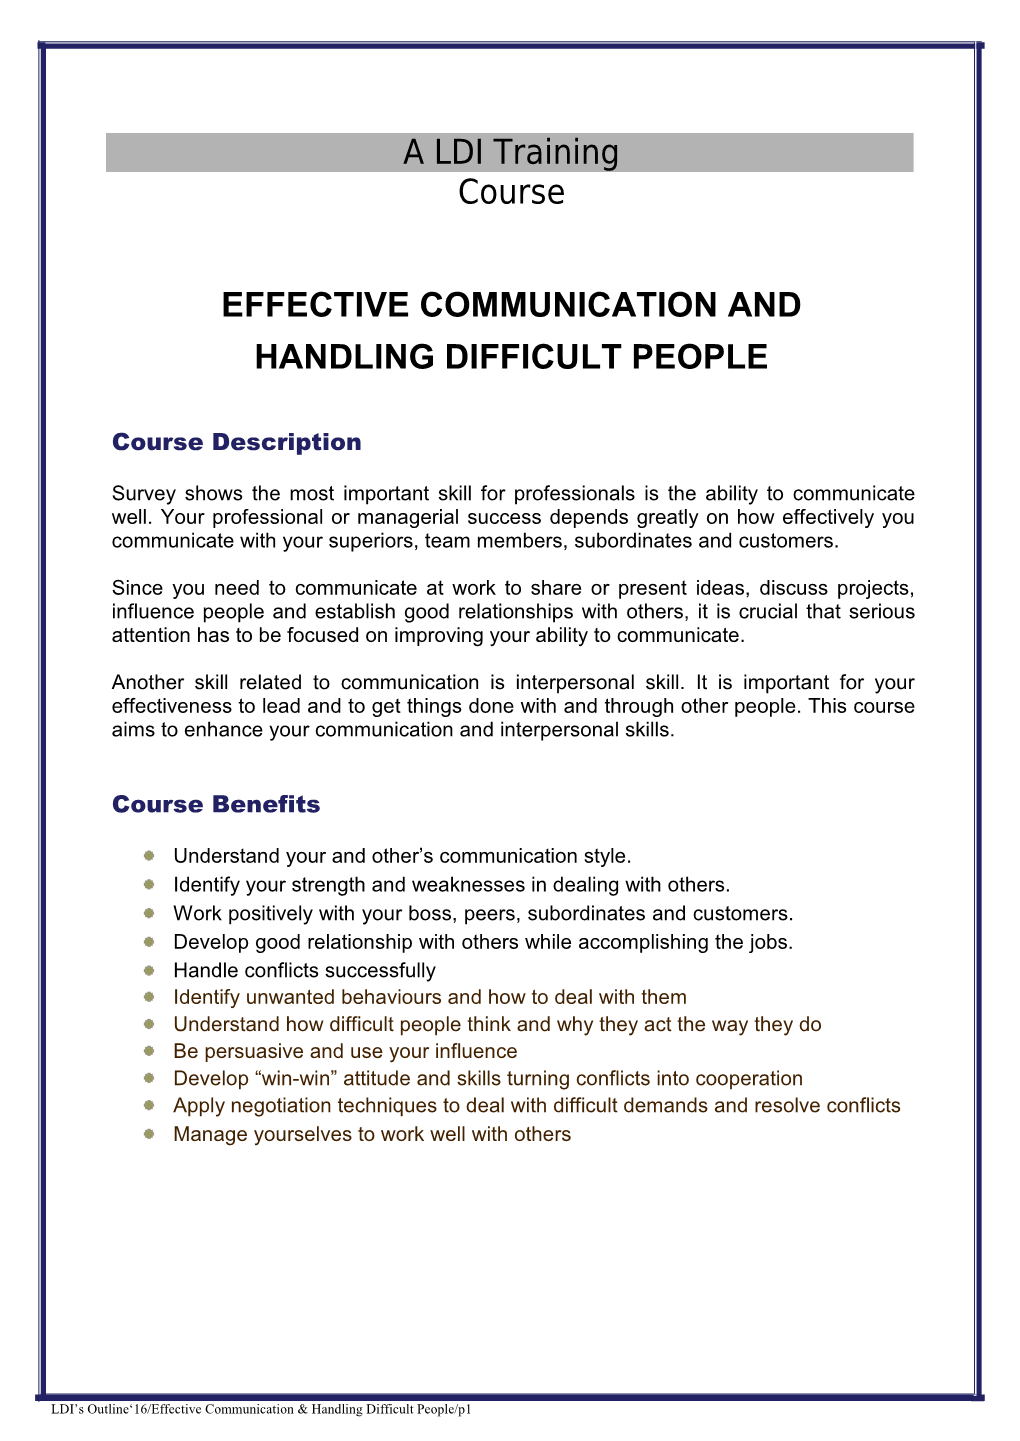 Interpersonal Communication Skills